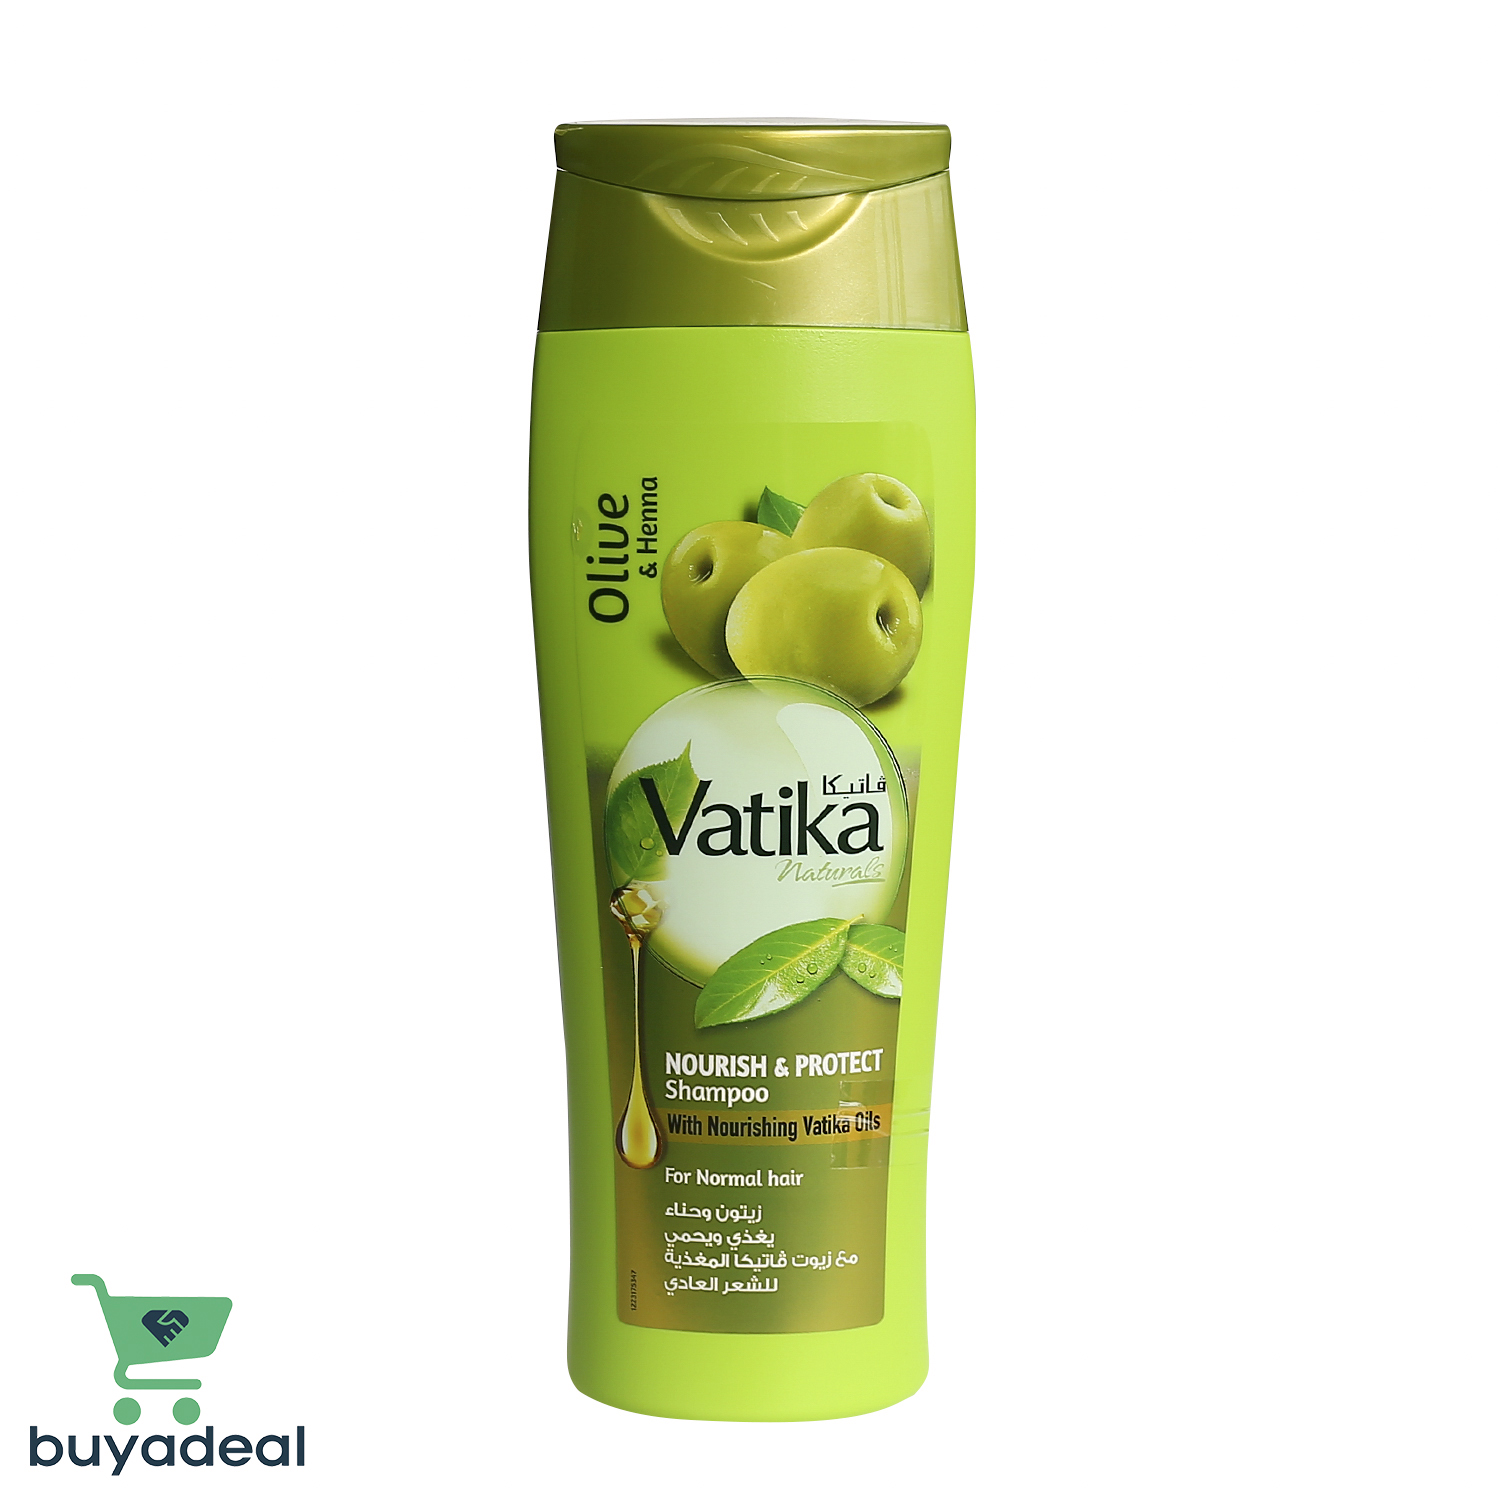 Buyadeal Product Vatika Nourish & Protect Shampoo -Olive & Henna 400ml